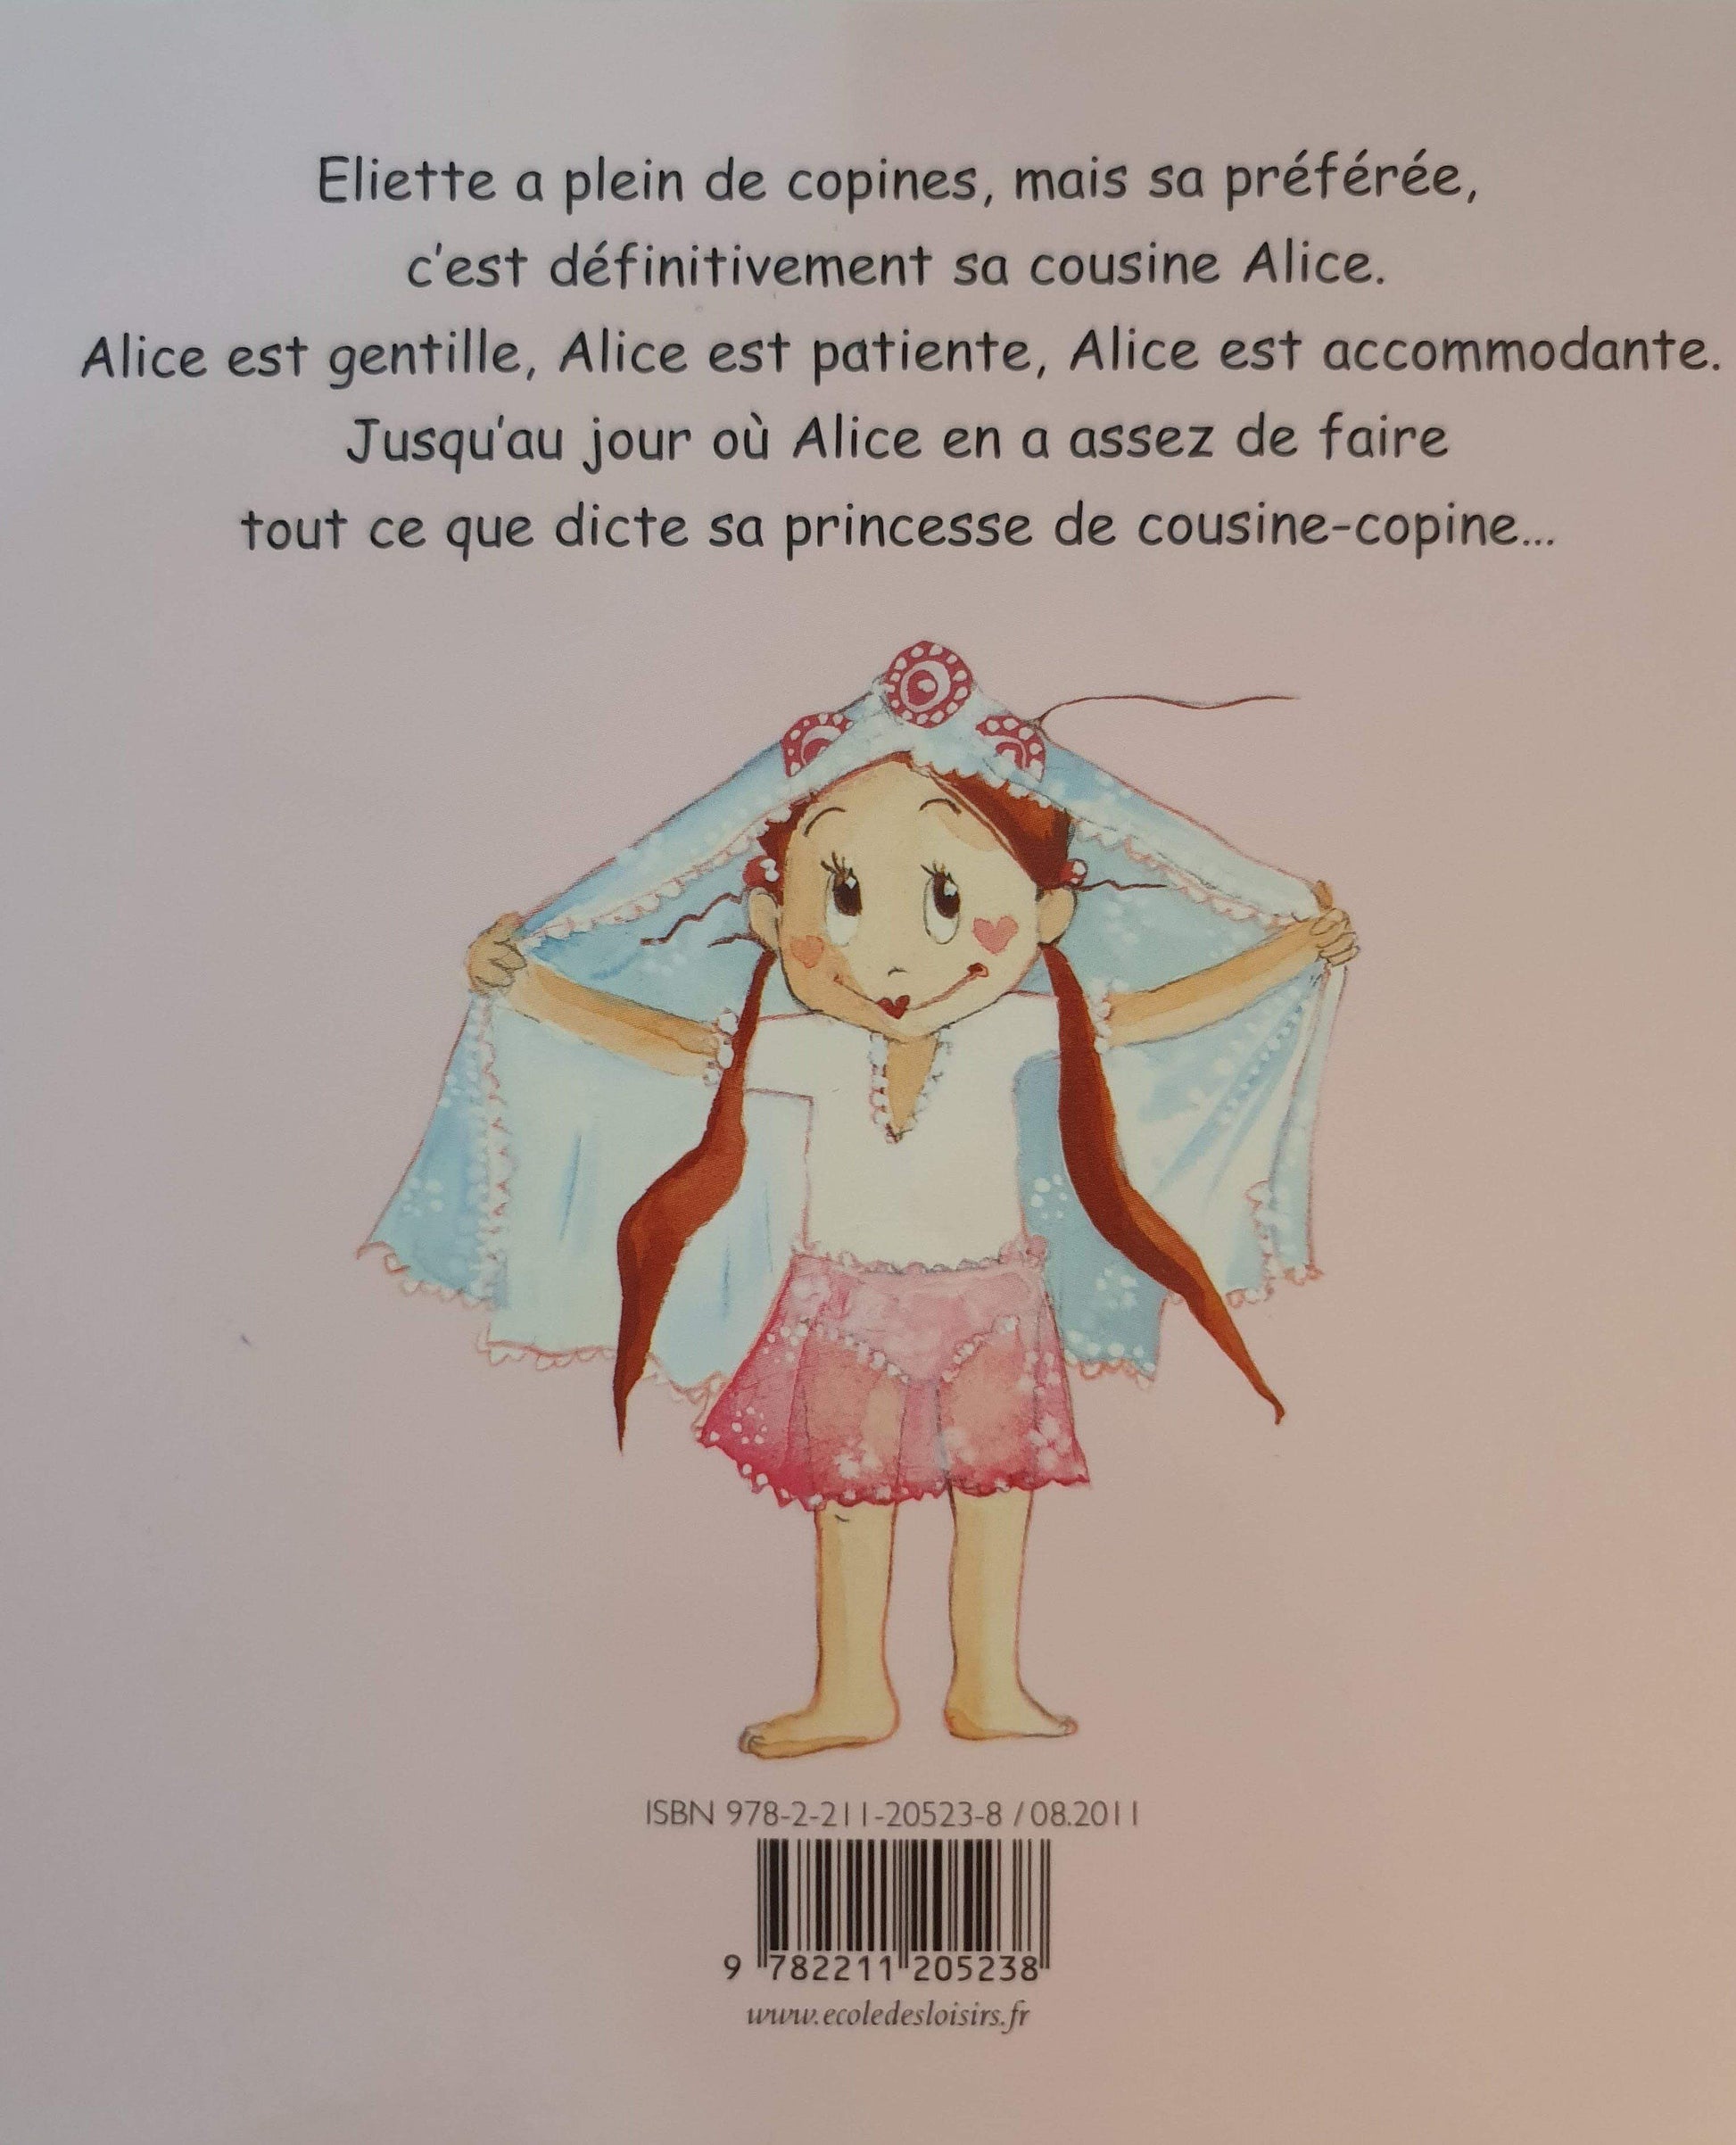 Princesse copine-en-chef Like New Recuddles.ch  (6071794794681)